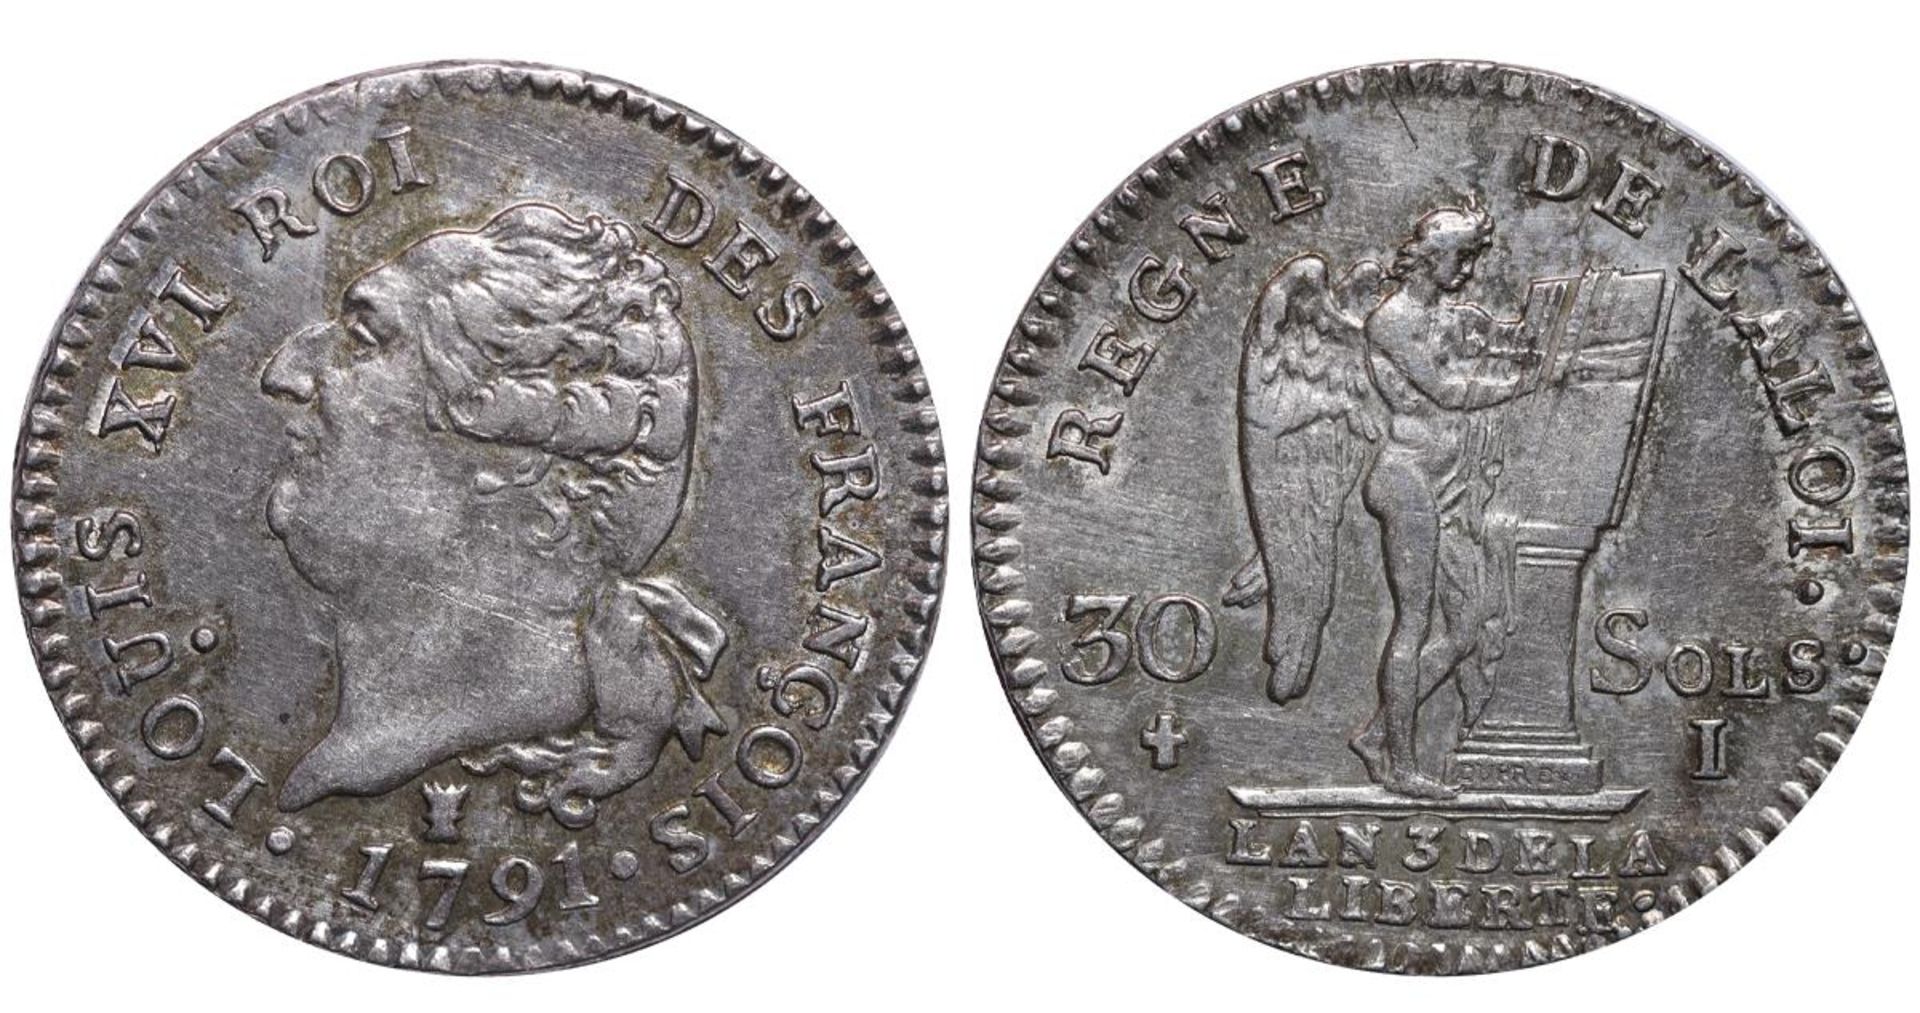 France, 30 Sols, 1791 year, I